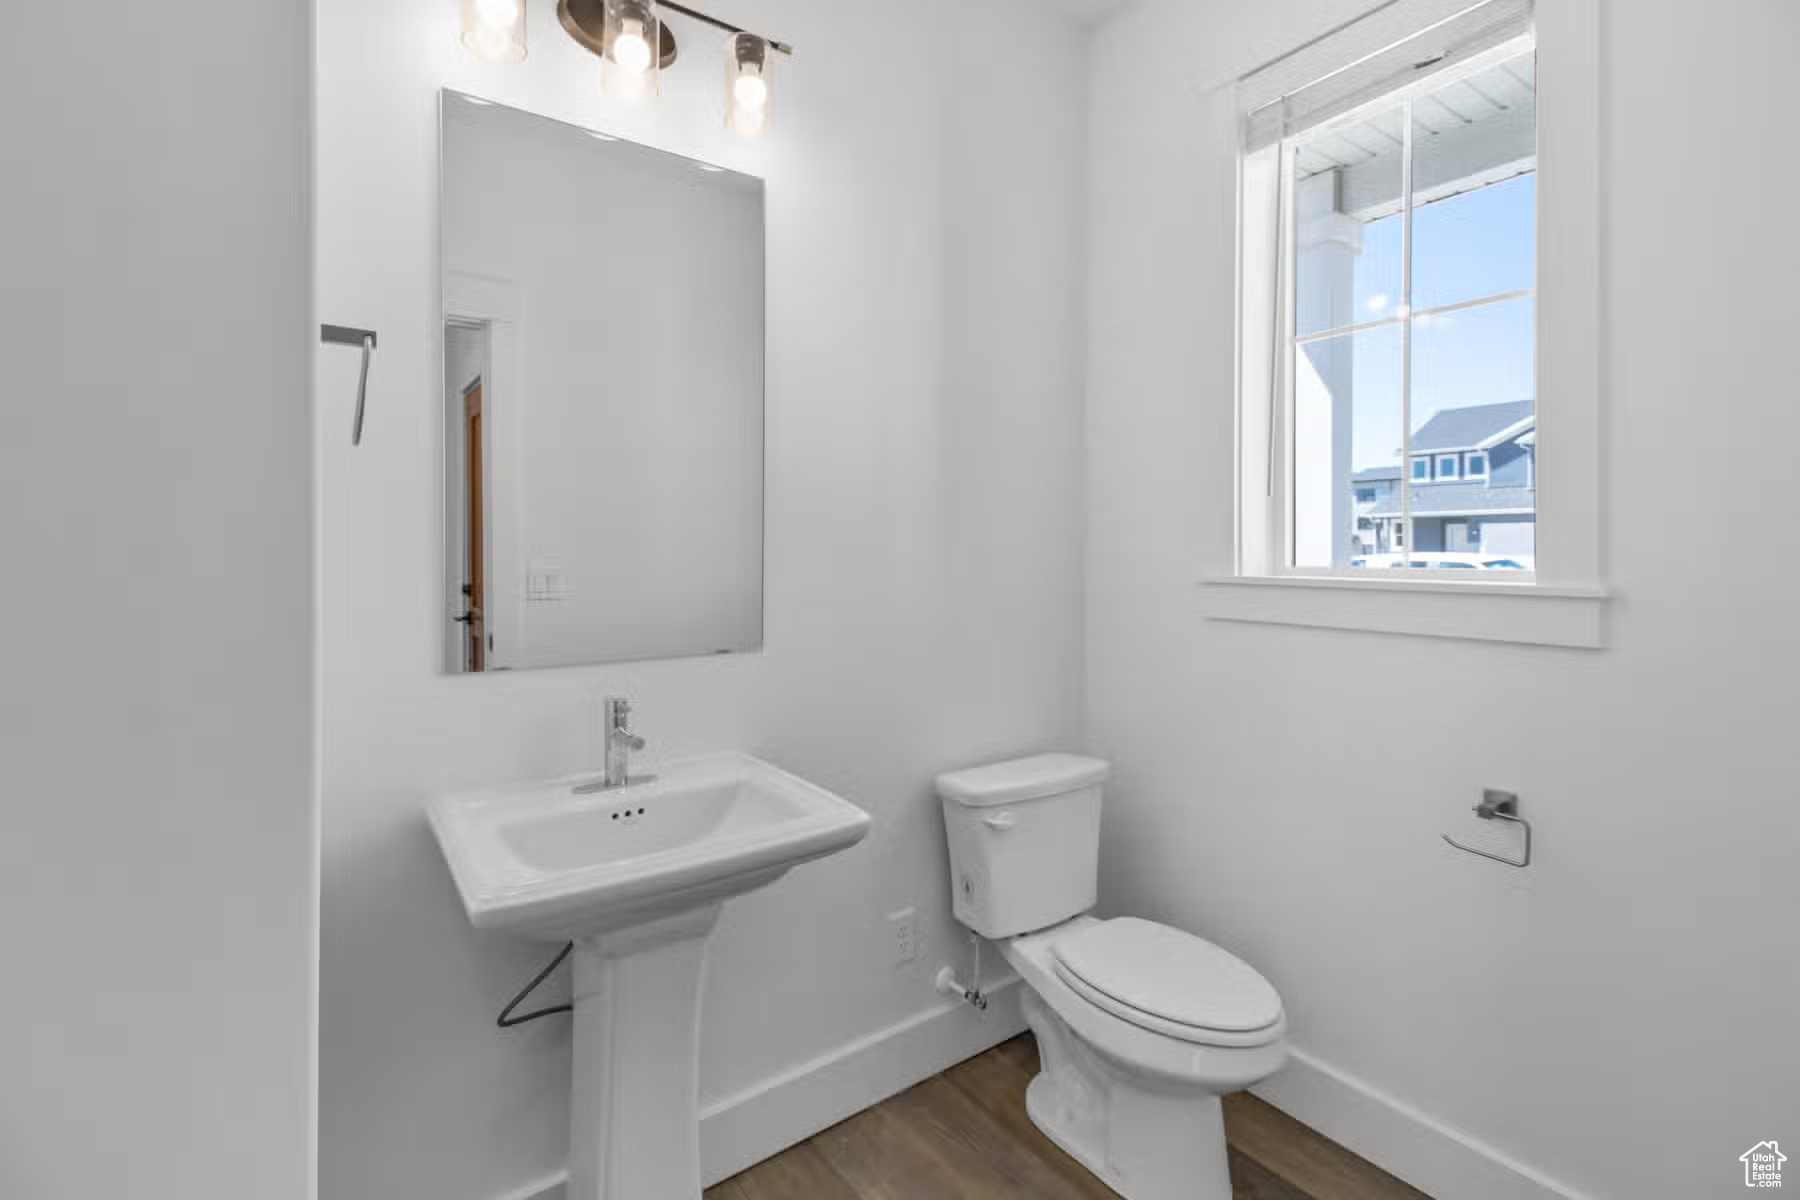 Bathroom featuring hardwood / wood-style flooring, toilet, and sink